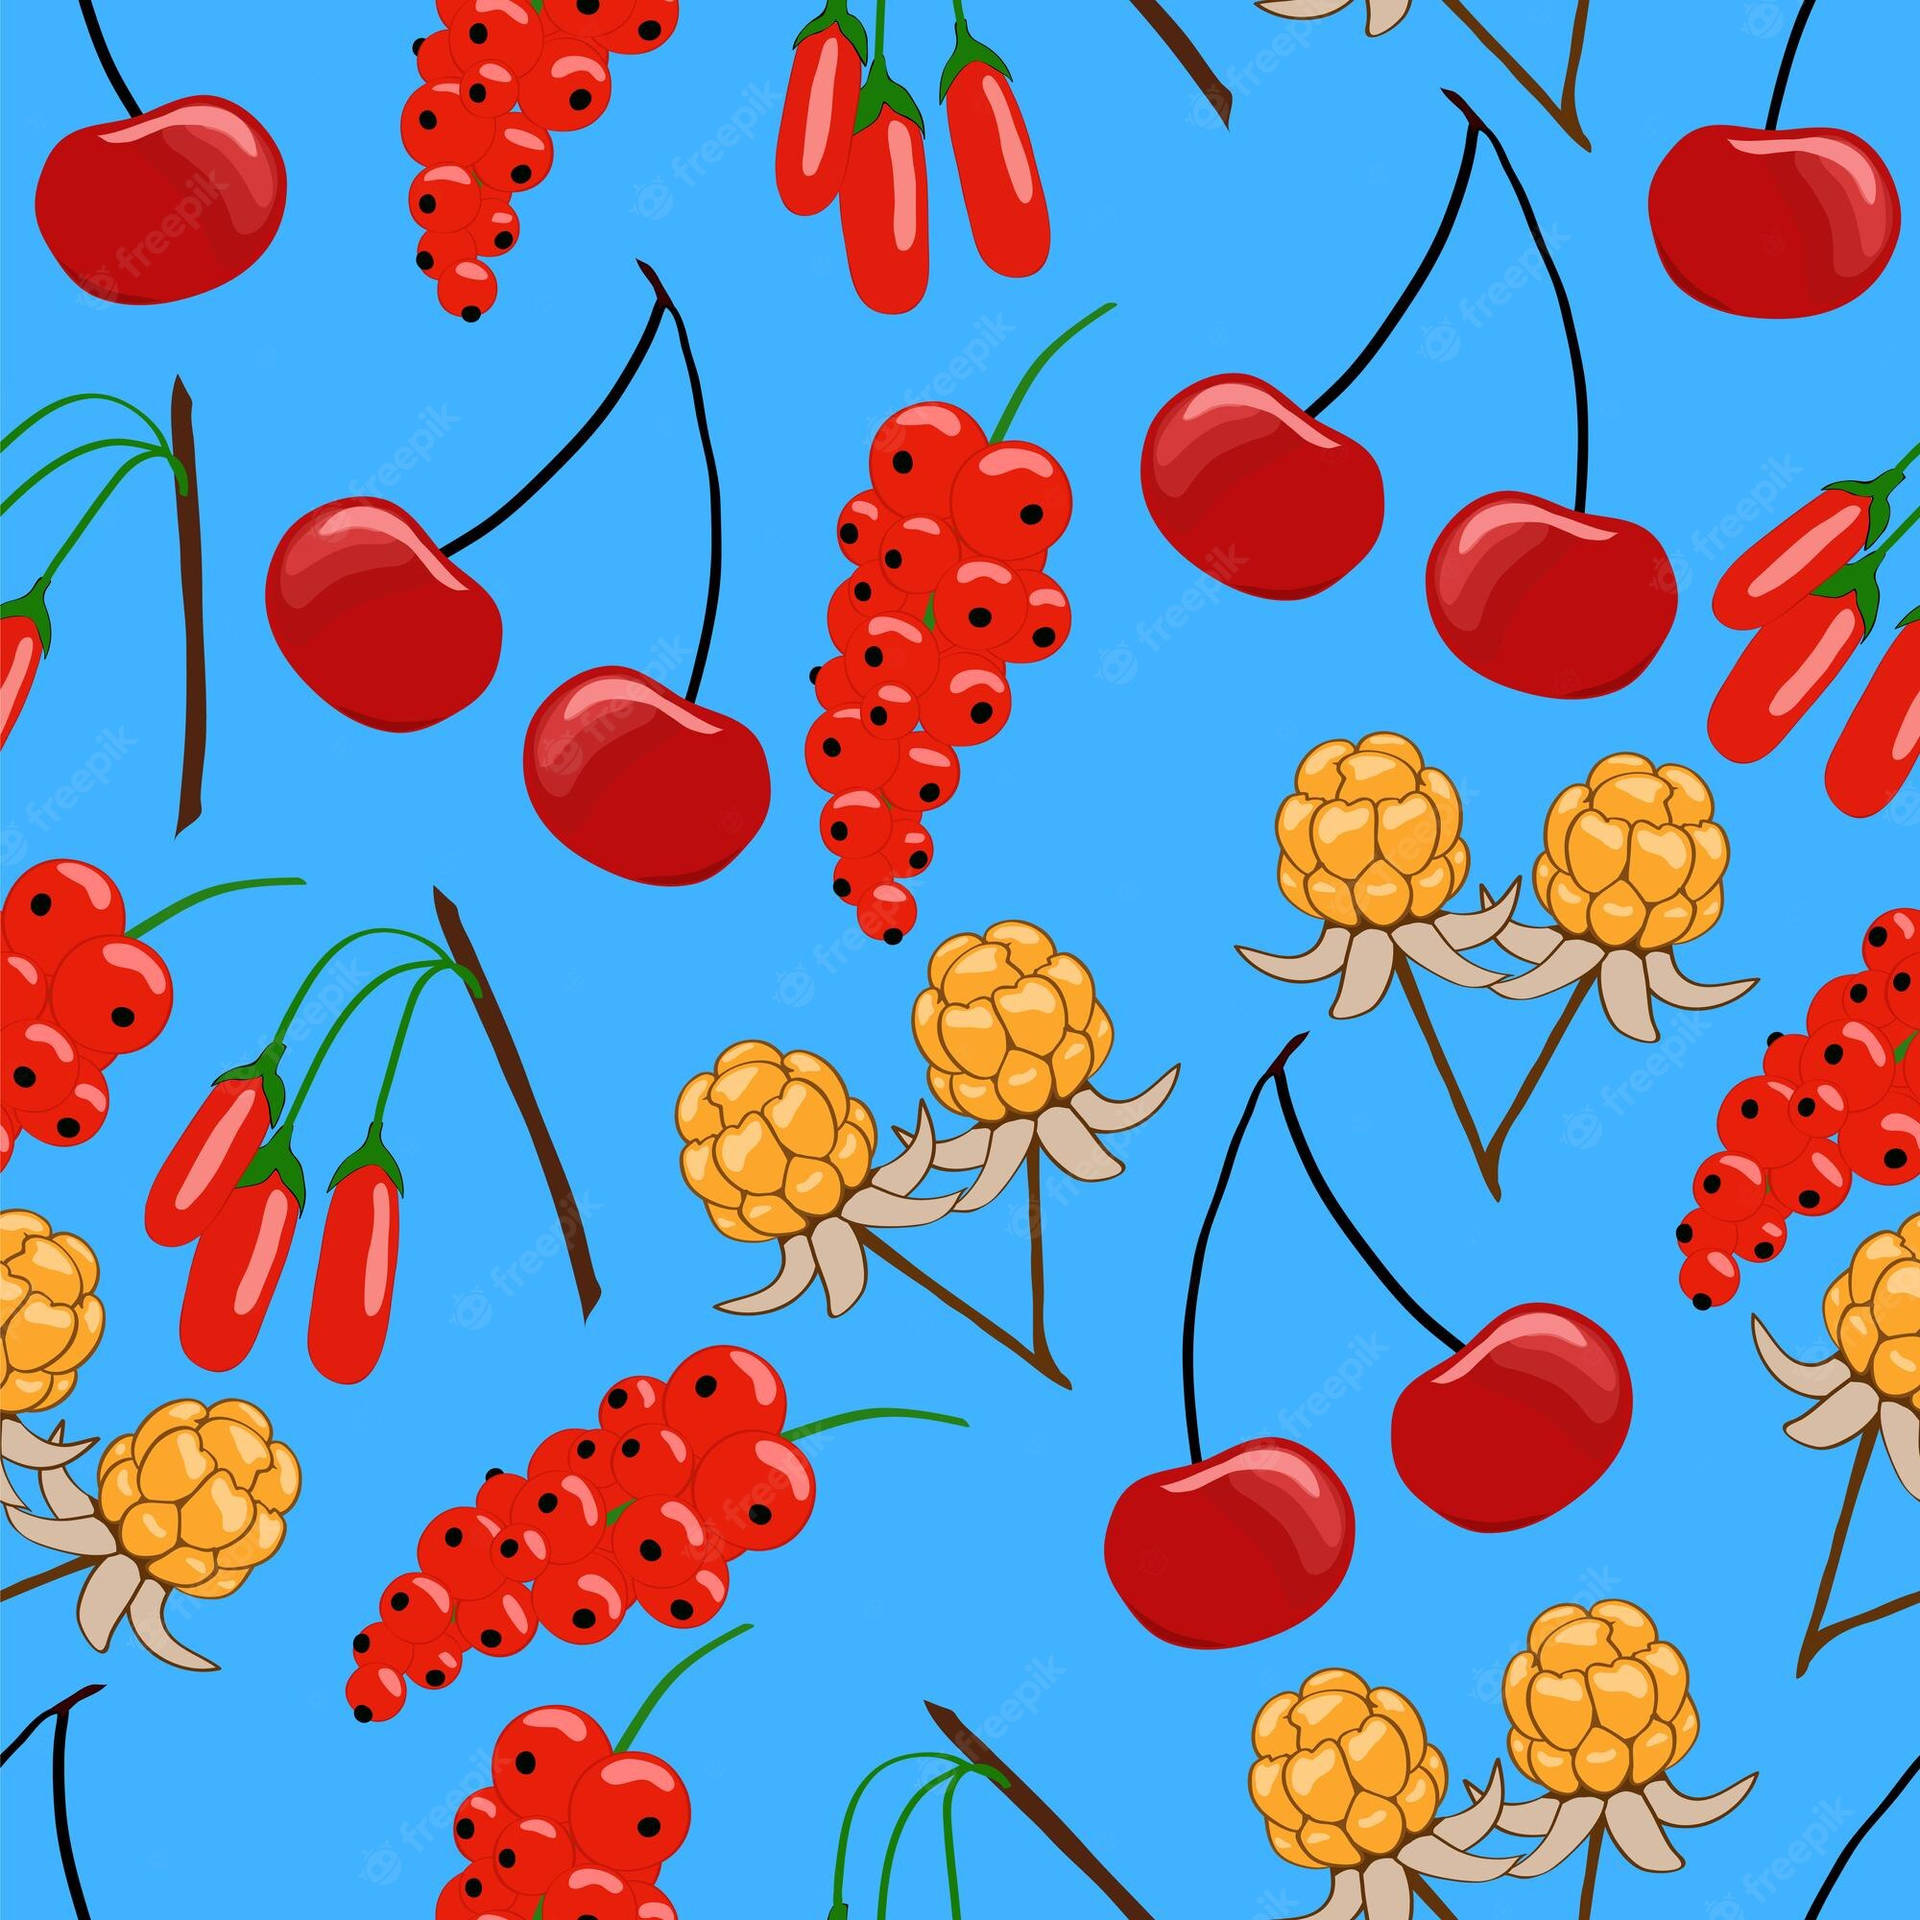 Cloudberries Chilis Cherries Cranberries Art Wallpaper